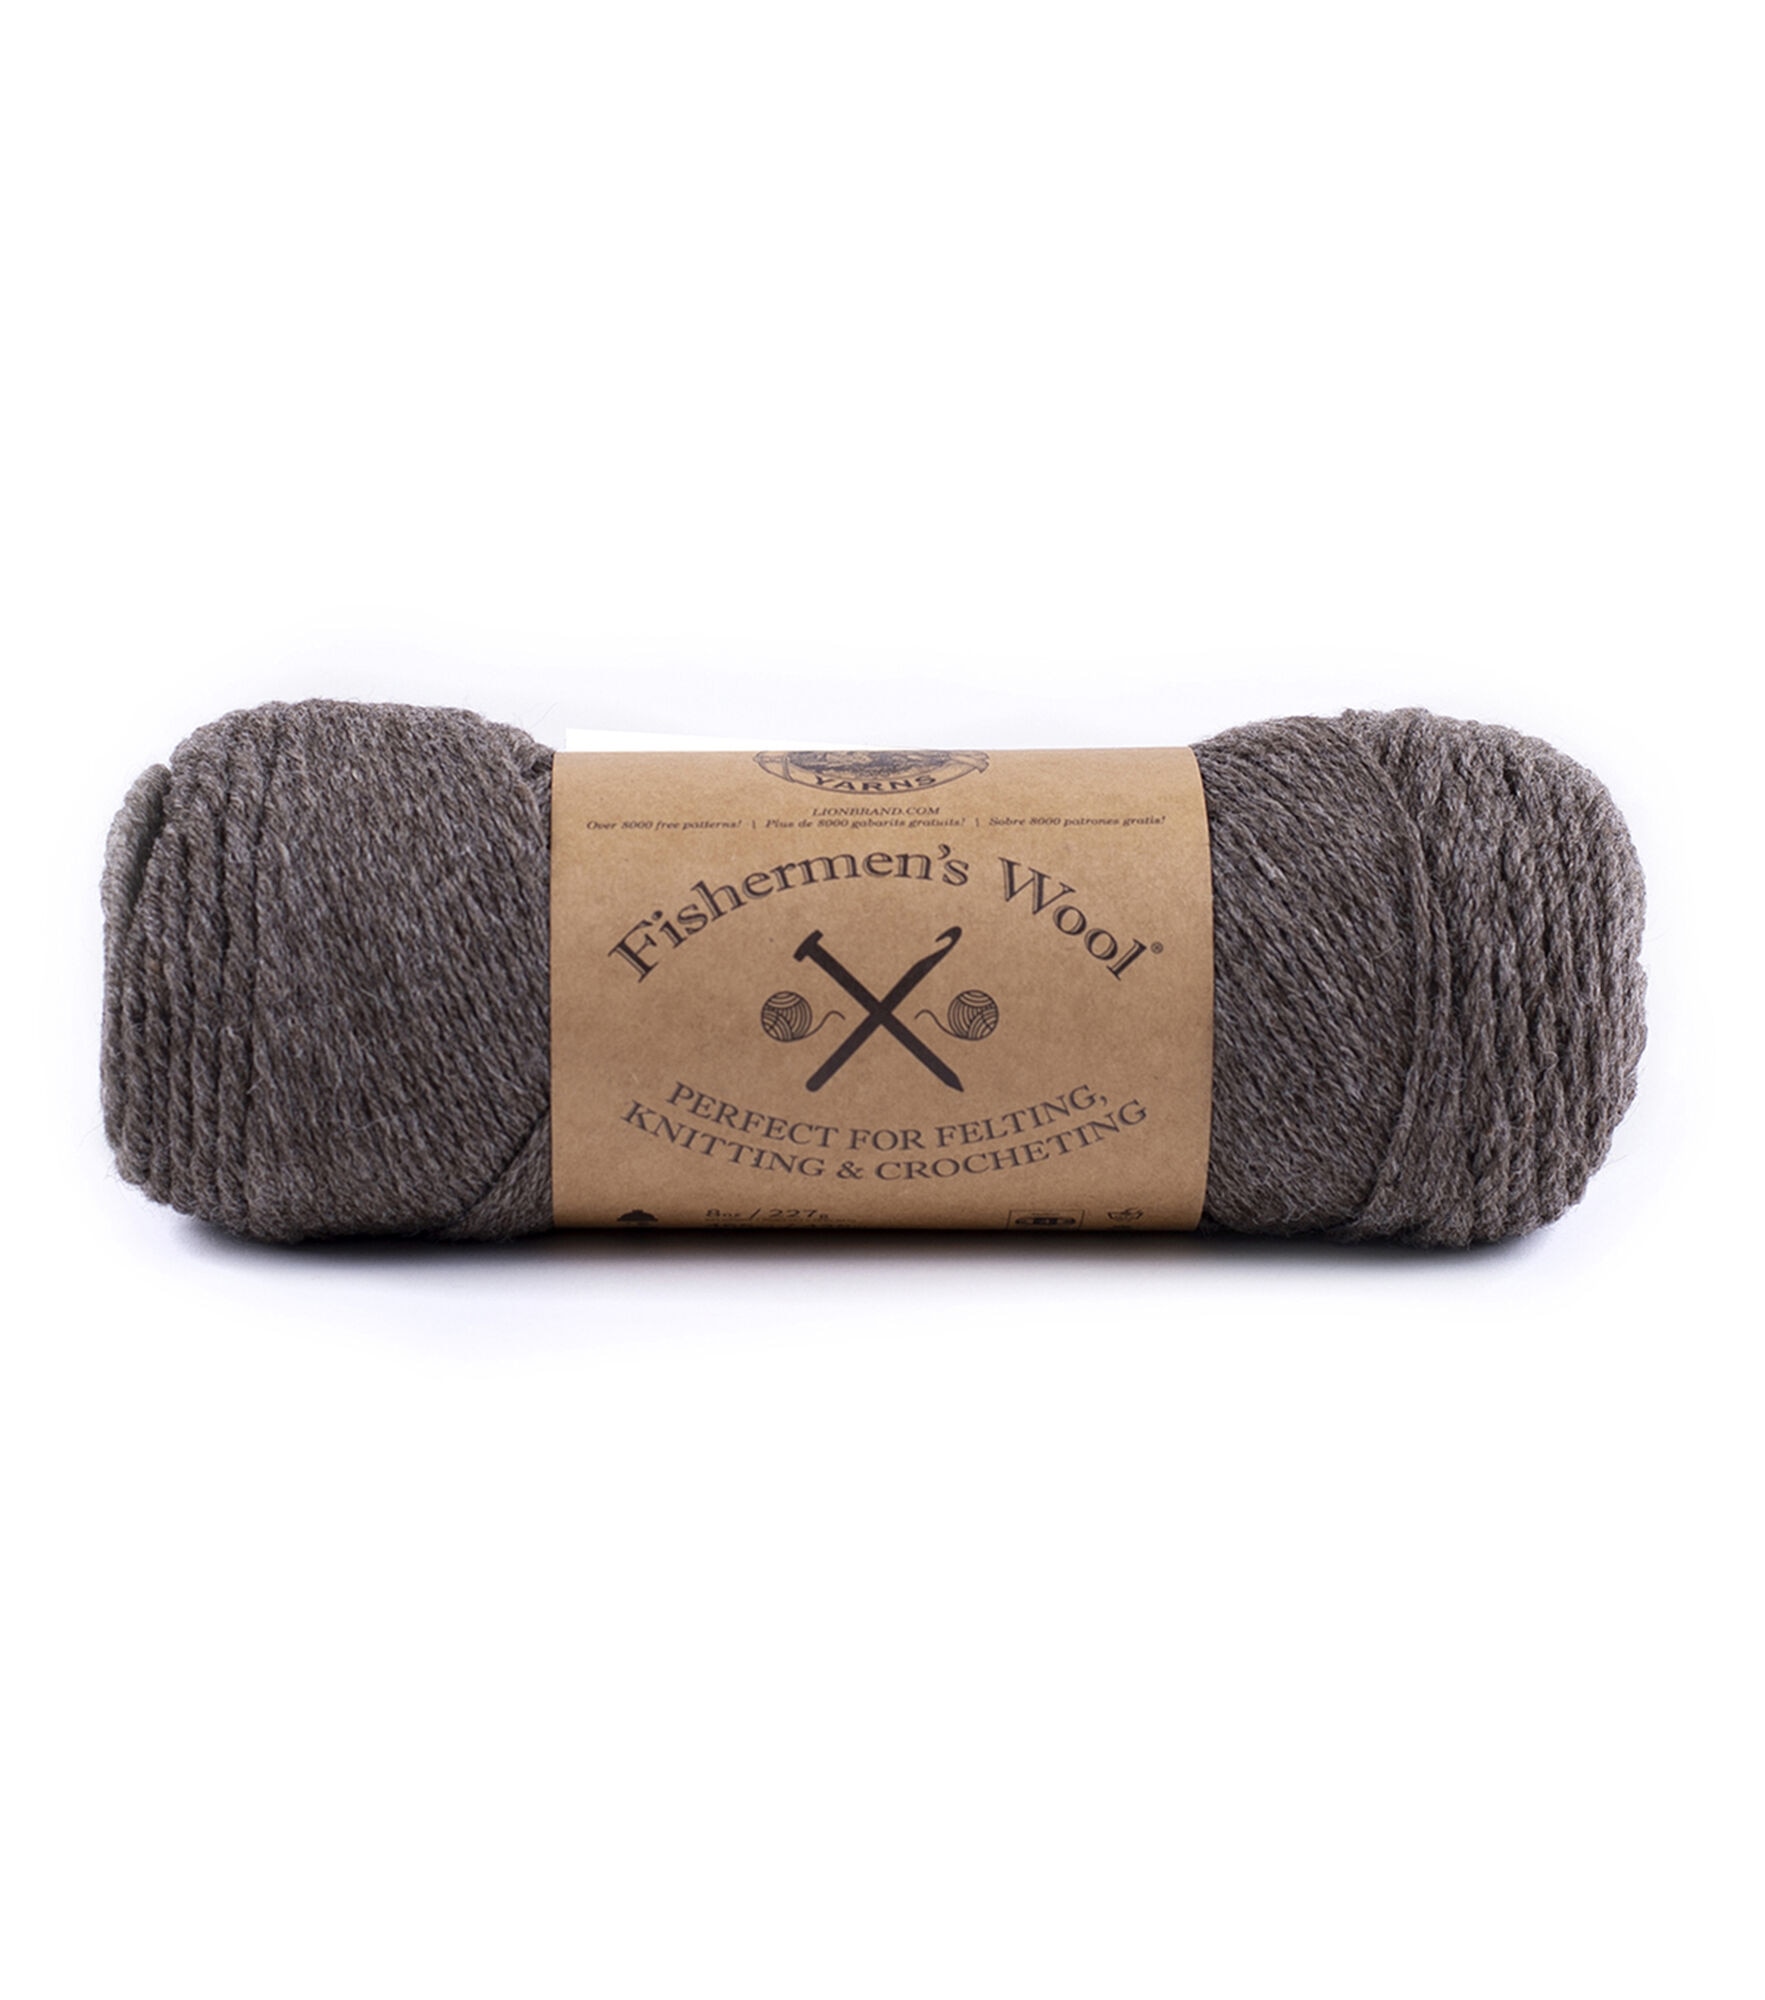 Lion Brand Fisherman's Wool used skein